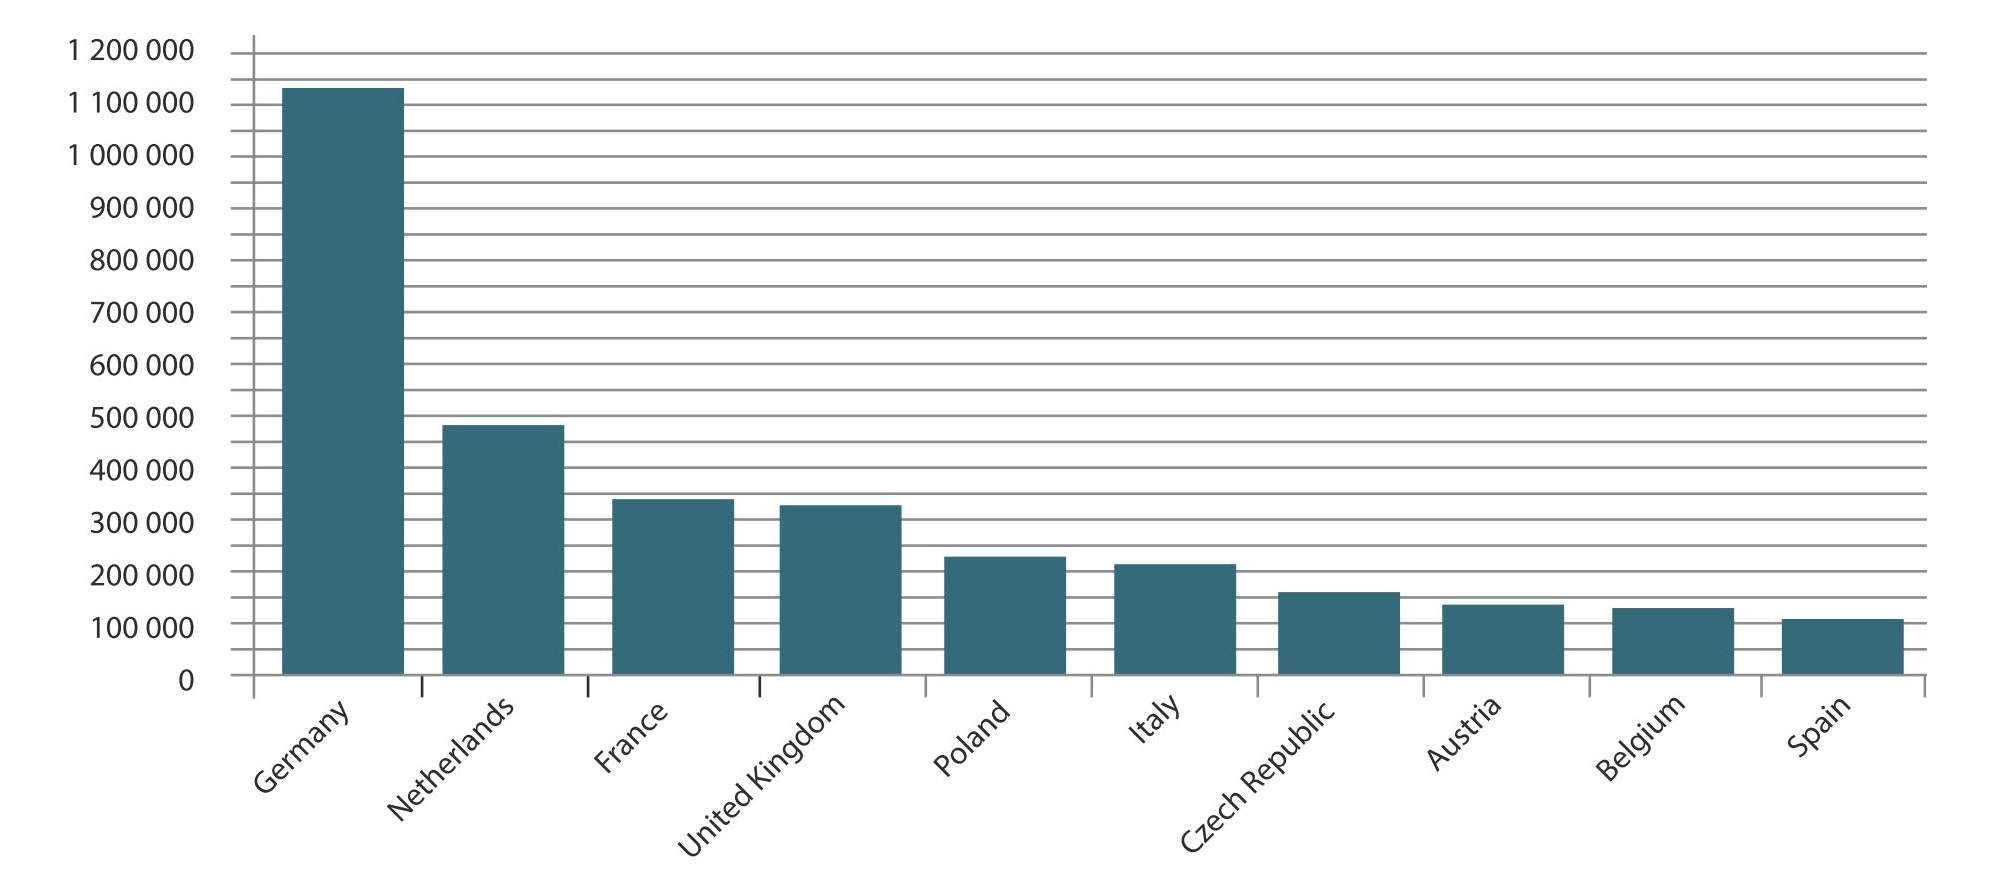 Top ten countries with most .eu registrations, Q3 2013 